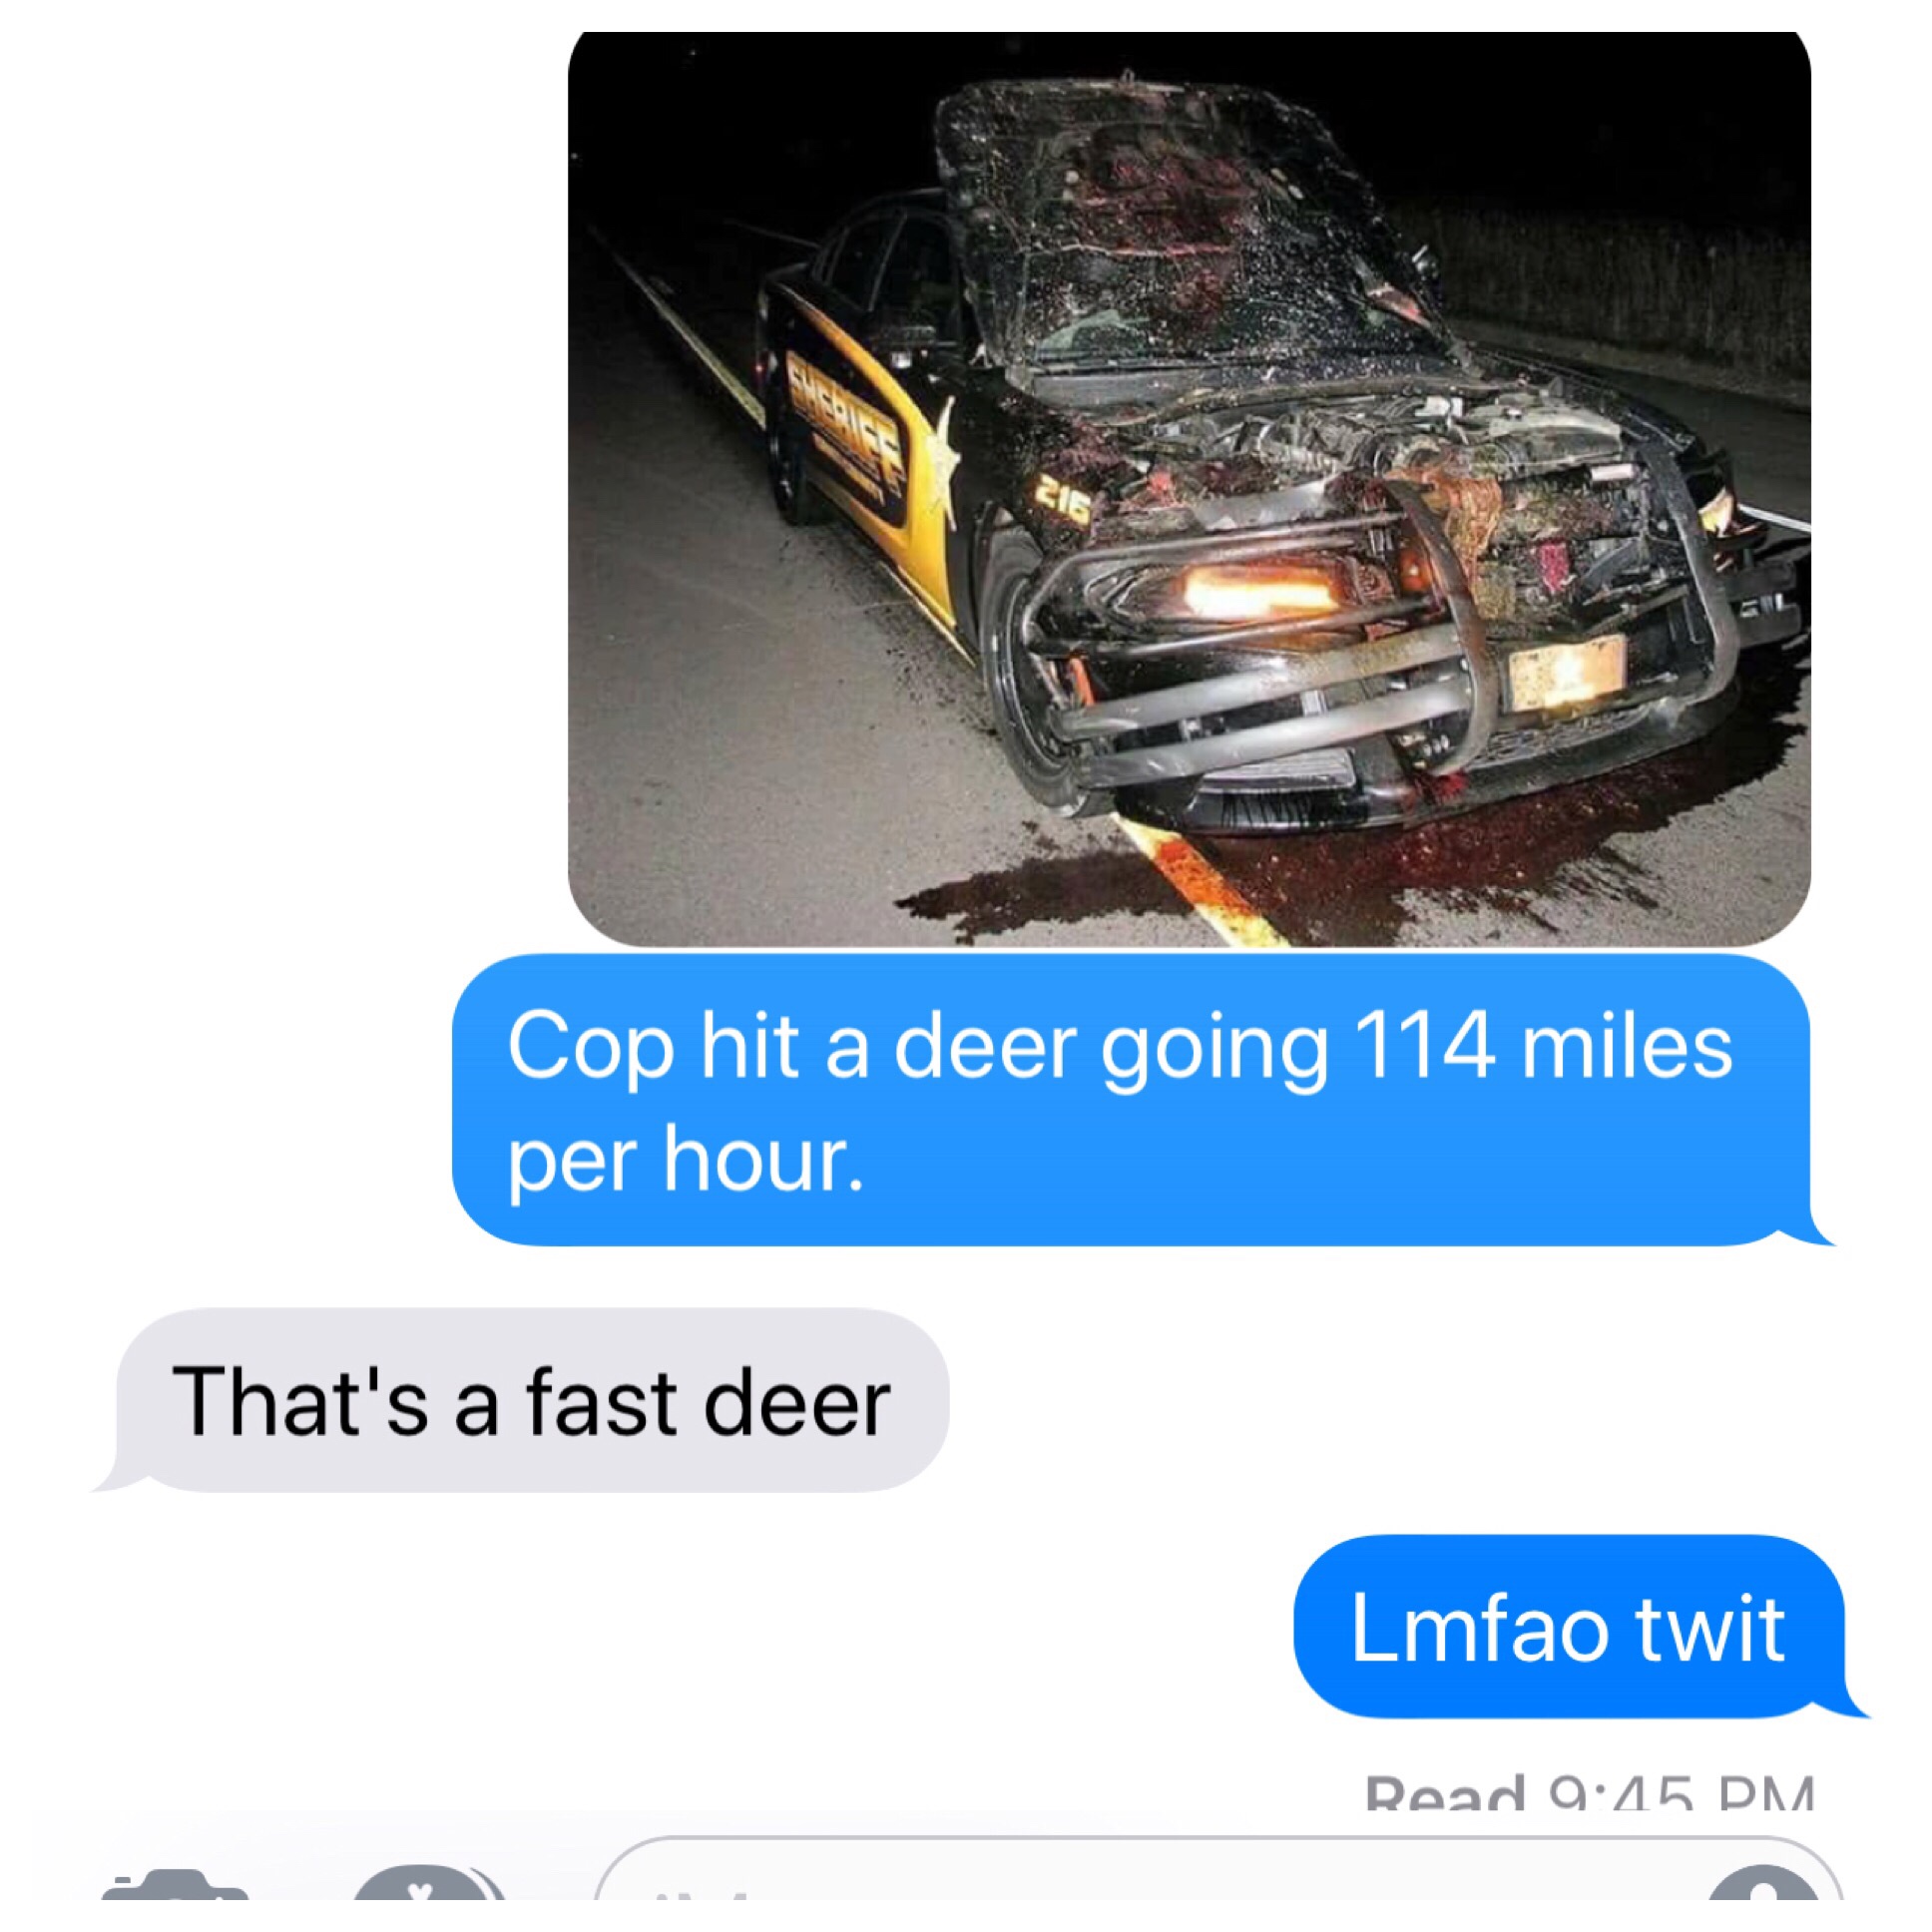 cops hits deer at 114 mph - Cop hit a deer going 114 miles per hour. That's a fast deer Lmfao twit Read